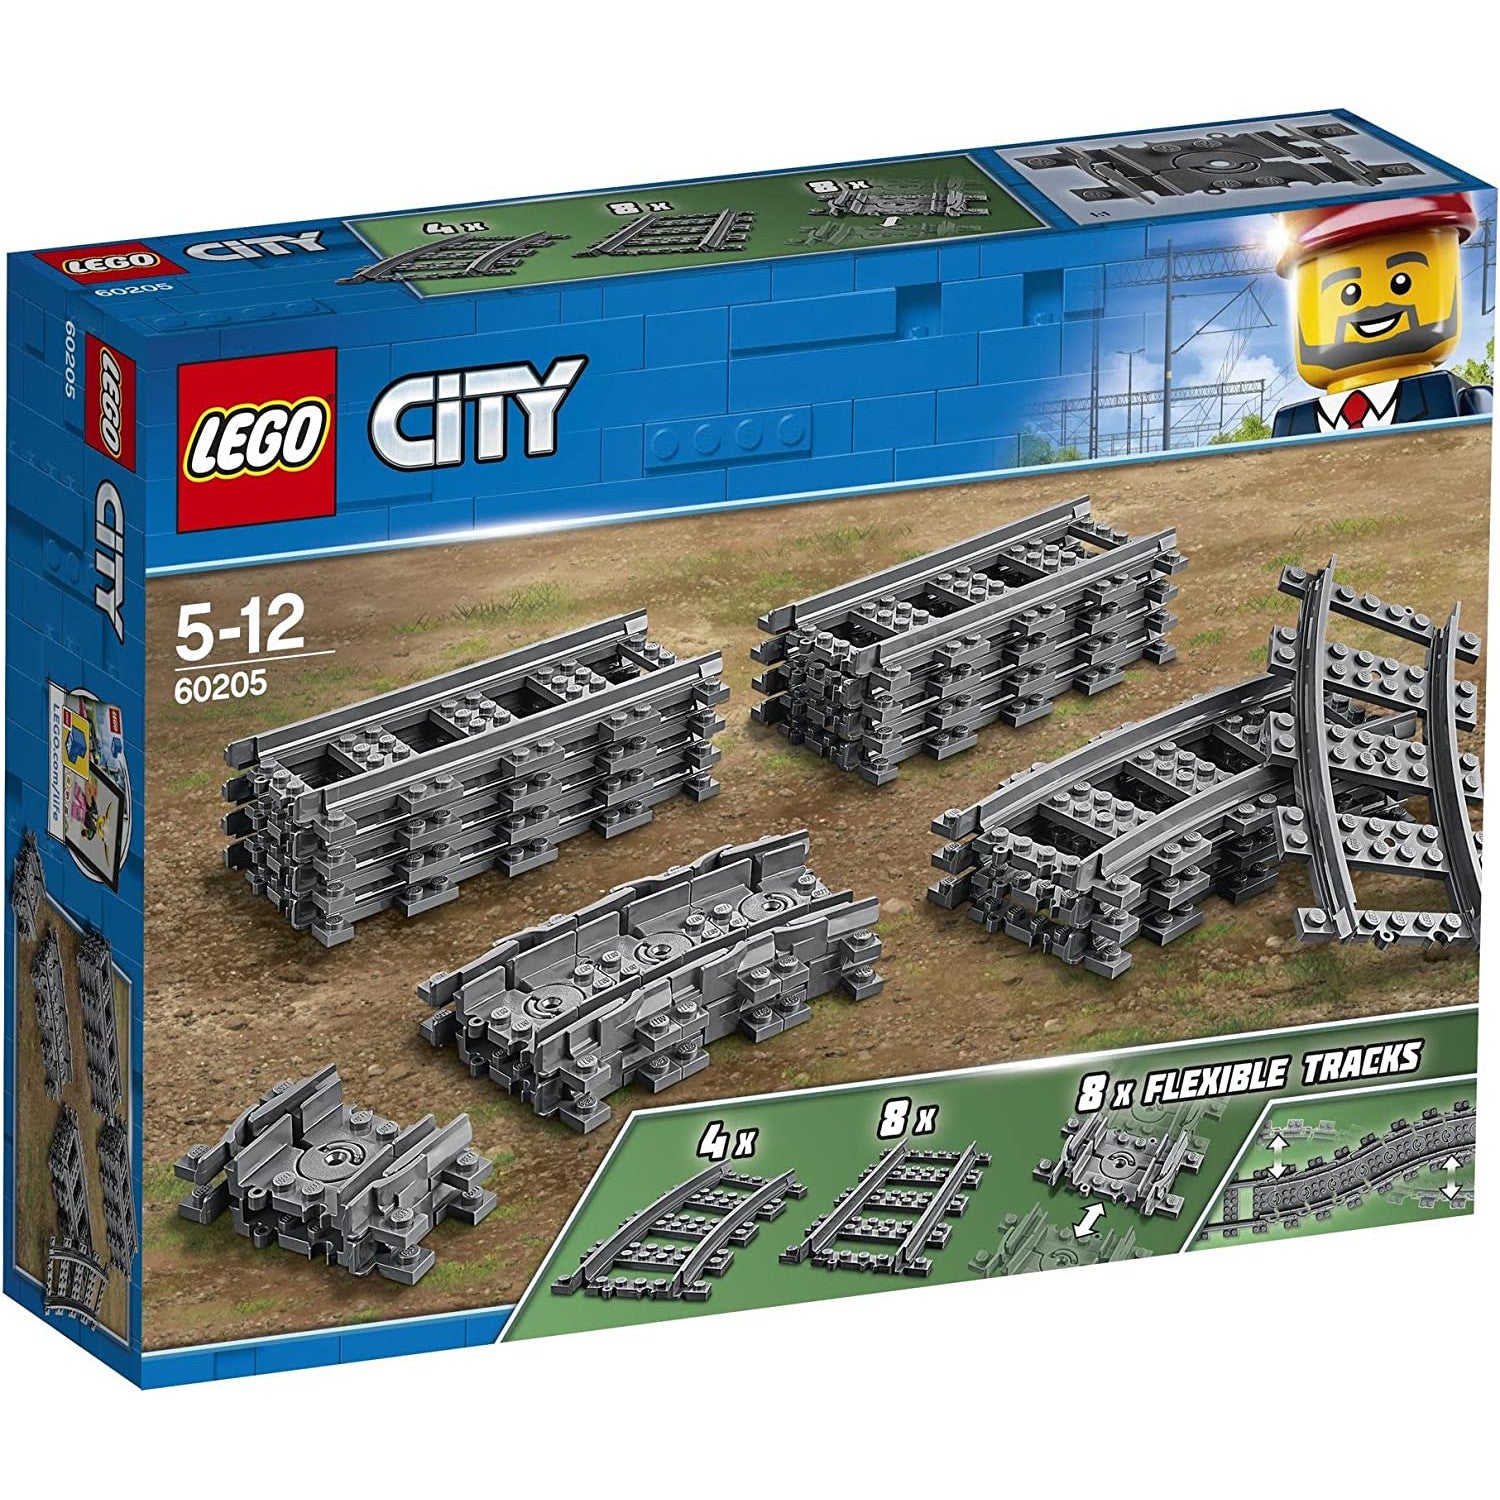 LEGO City Tracks 60205 3